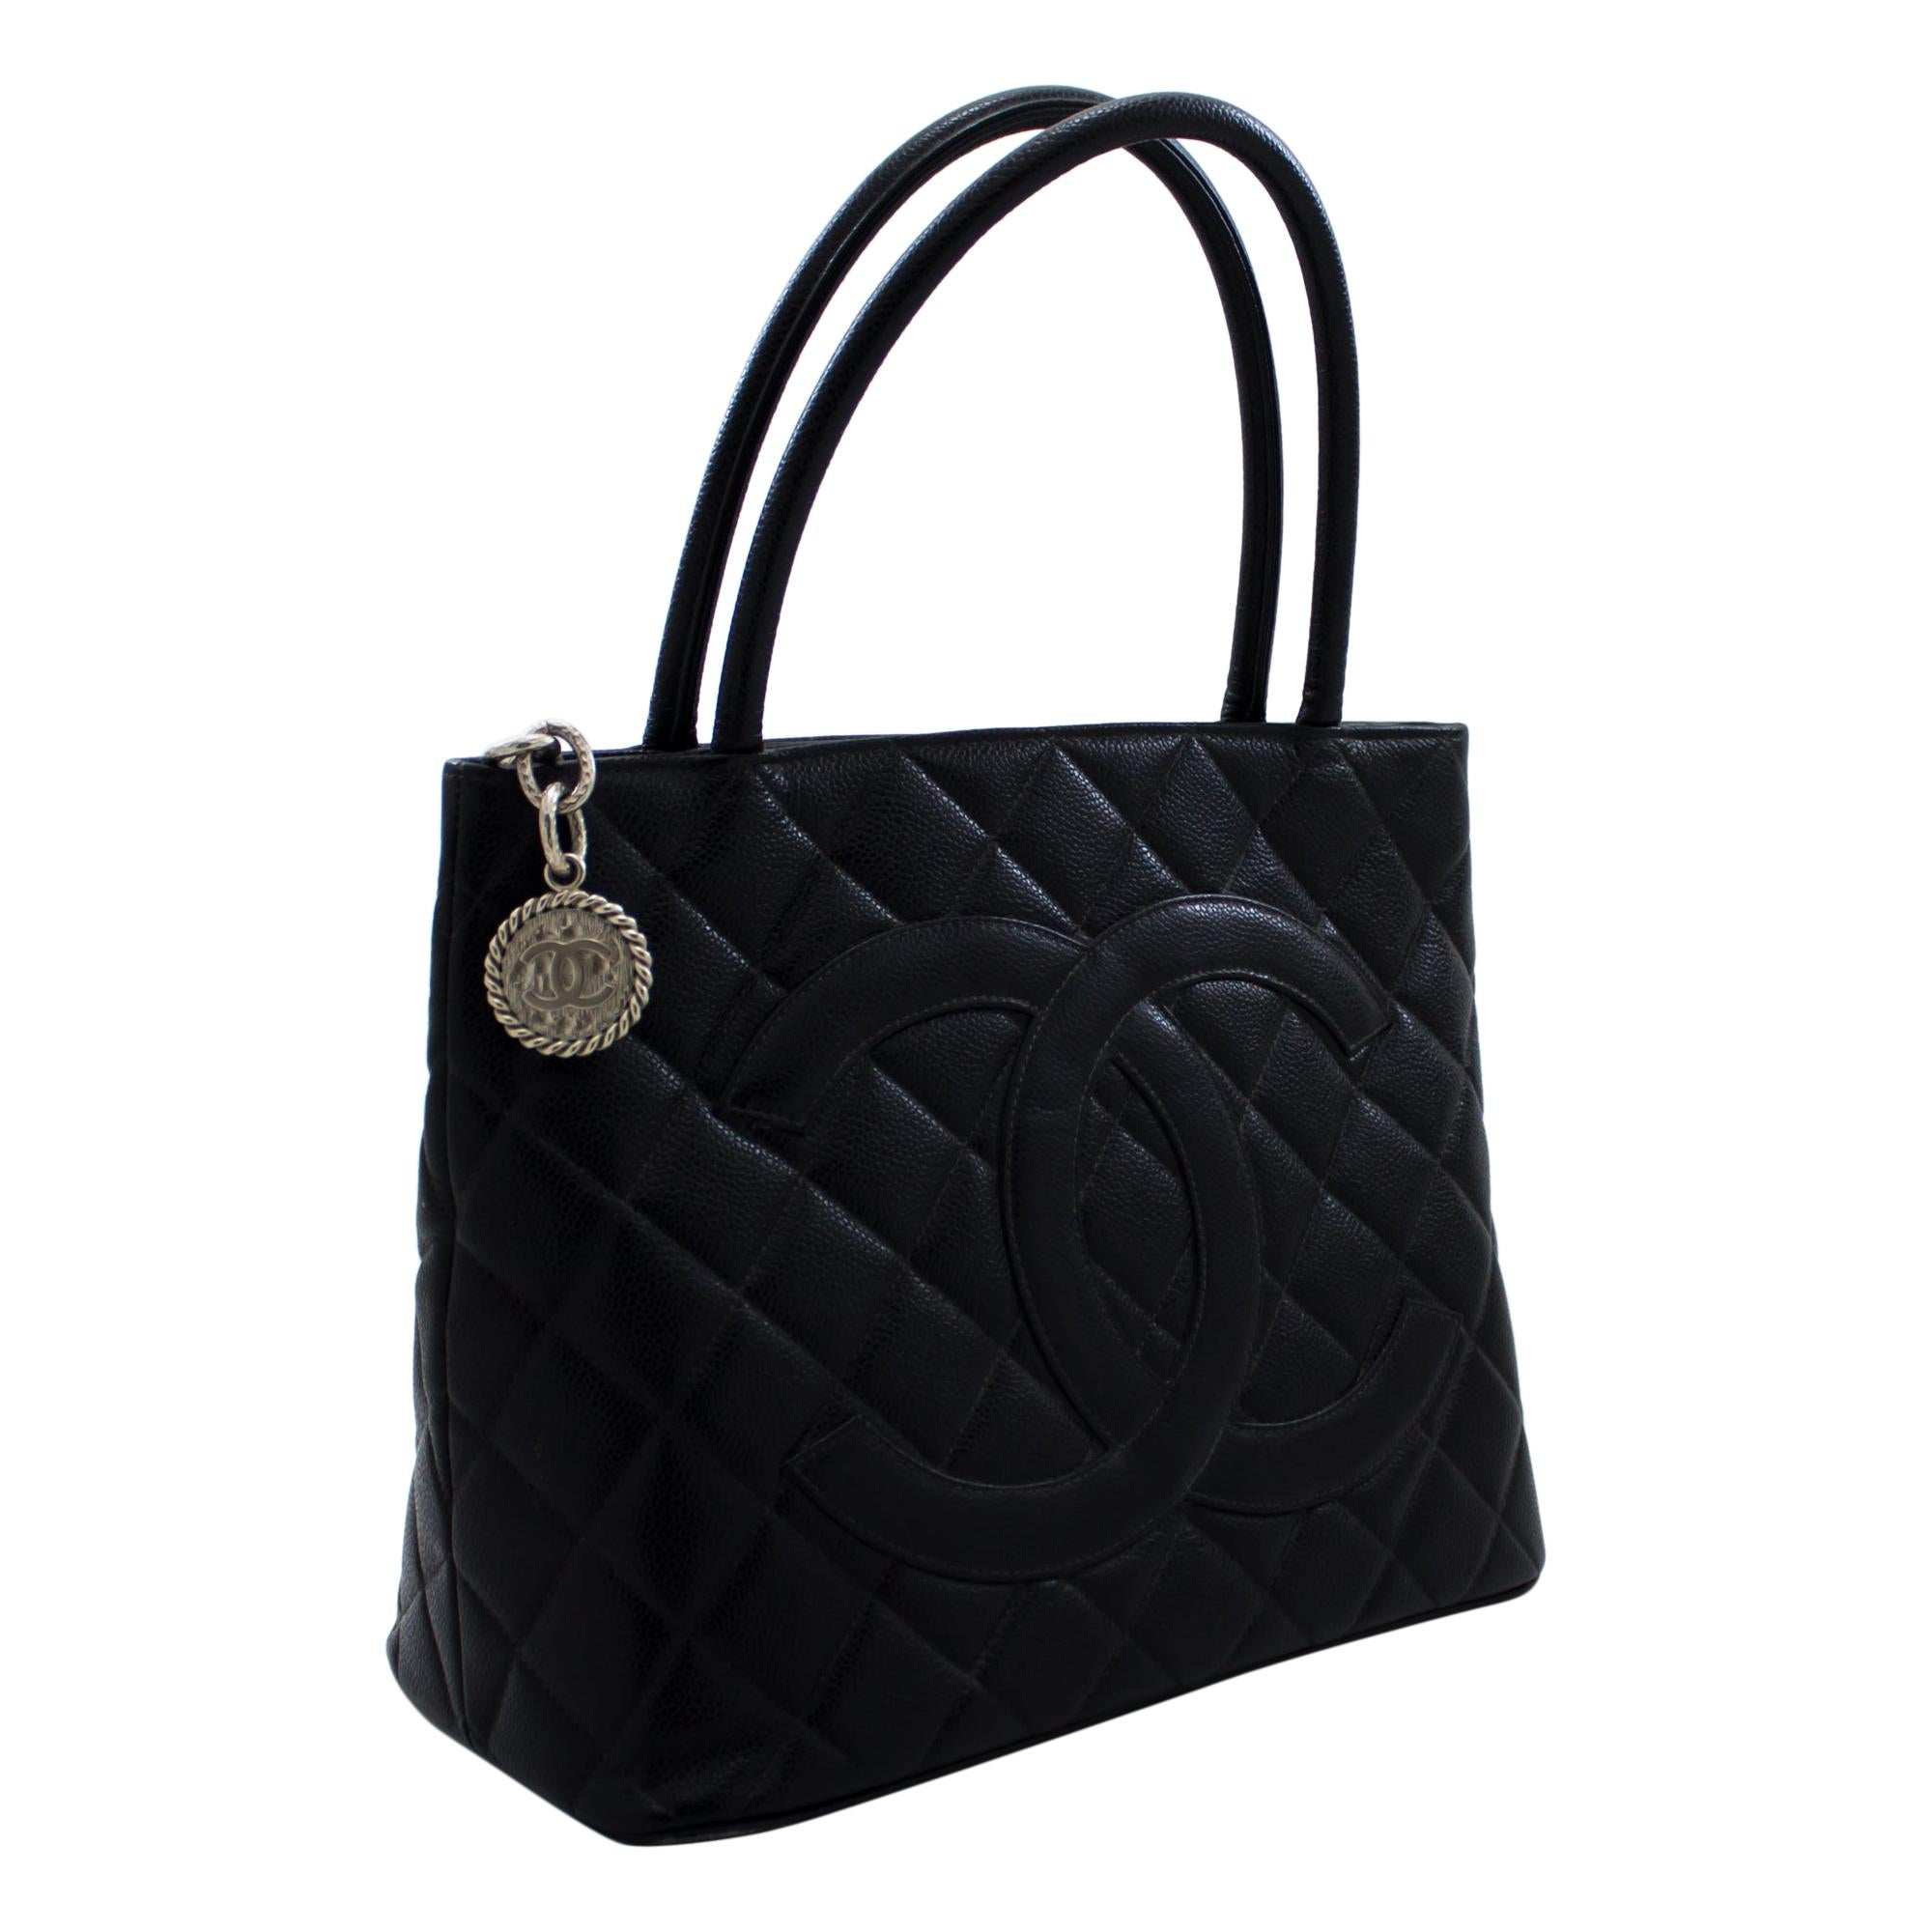 CHANEL Silver Medallion Caviar Shoulder Shopping Tote Bag Black Leather